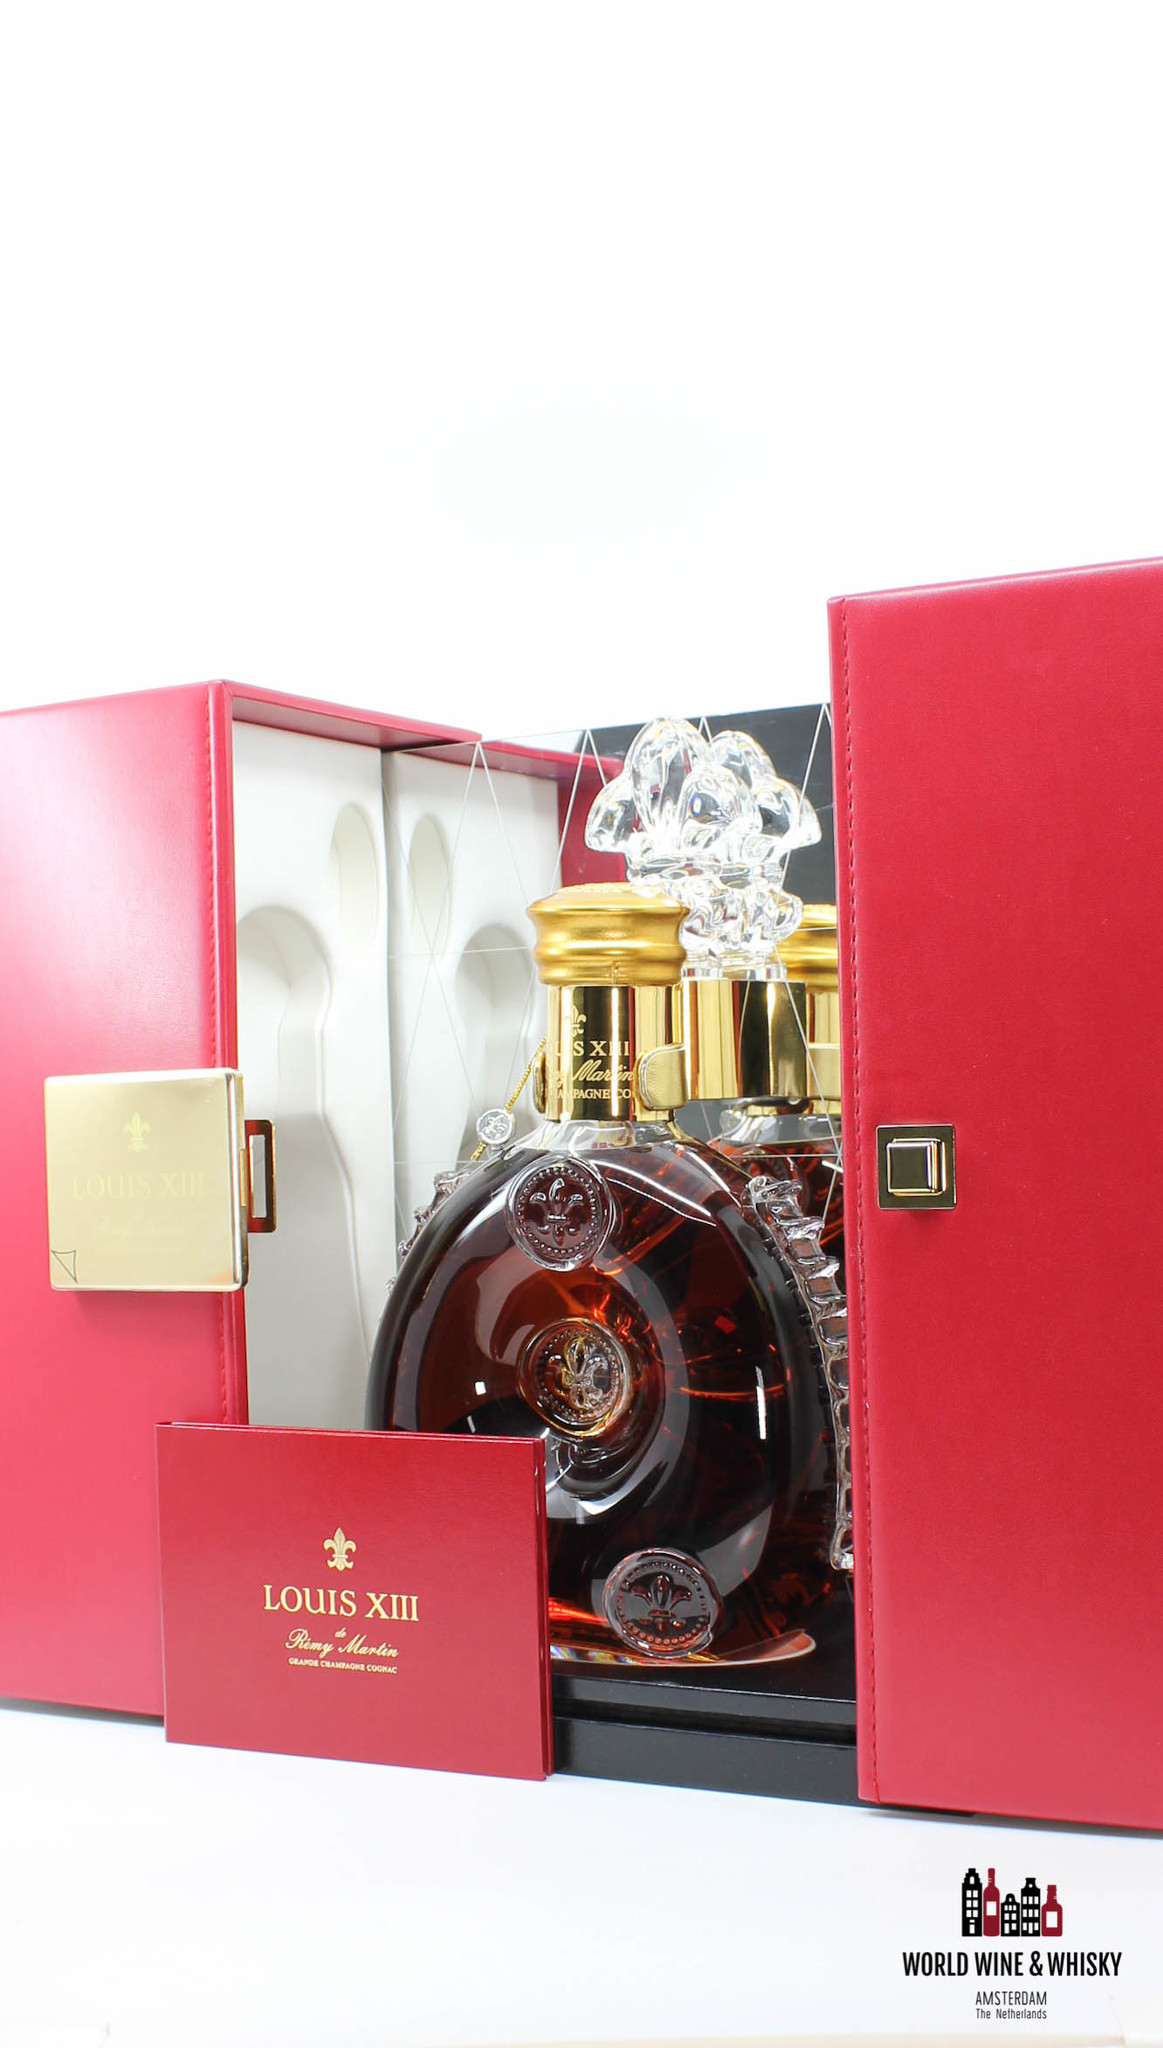 Rémy Martin LOUIS XIII Cognac Fine Champagne 40% Vol. 0,7l in Giftbox